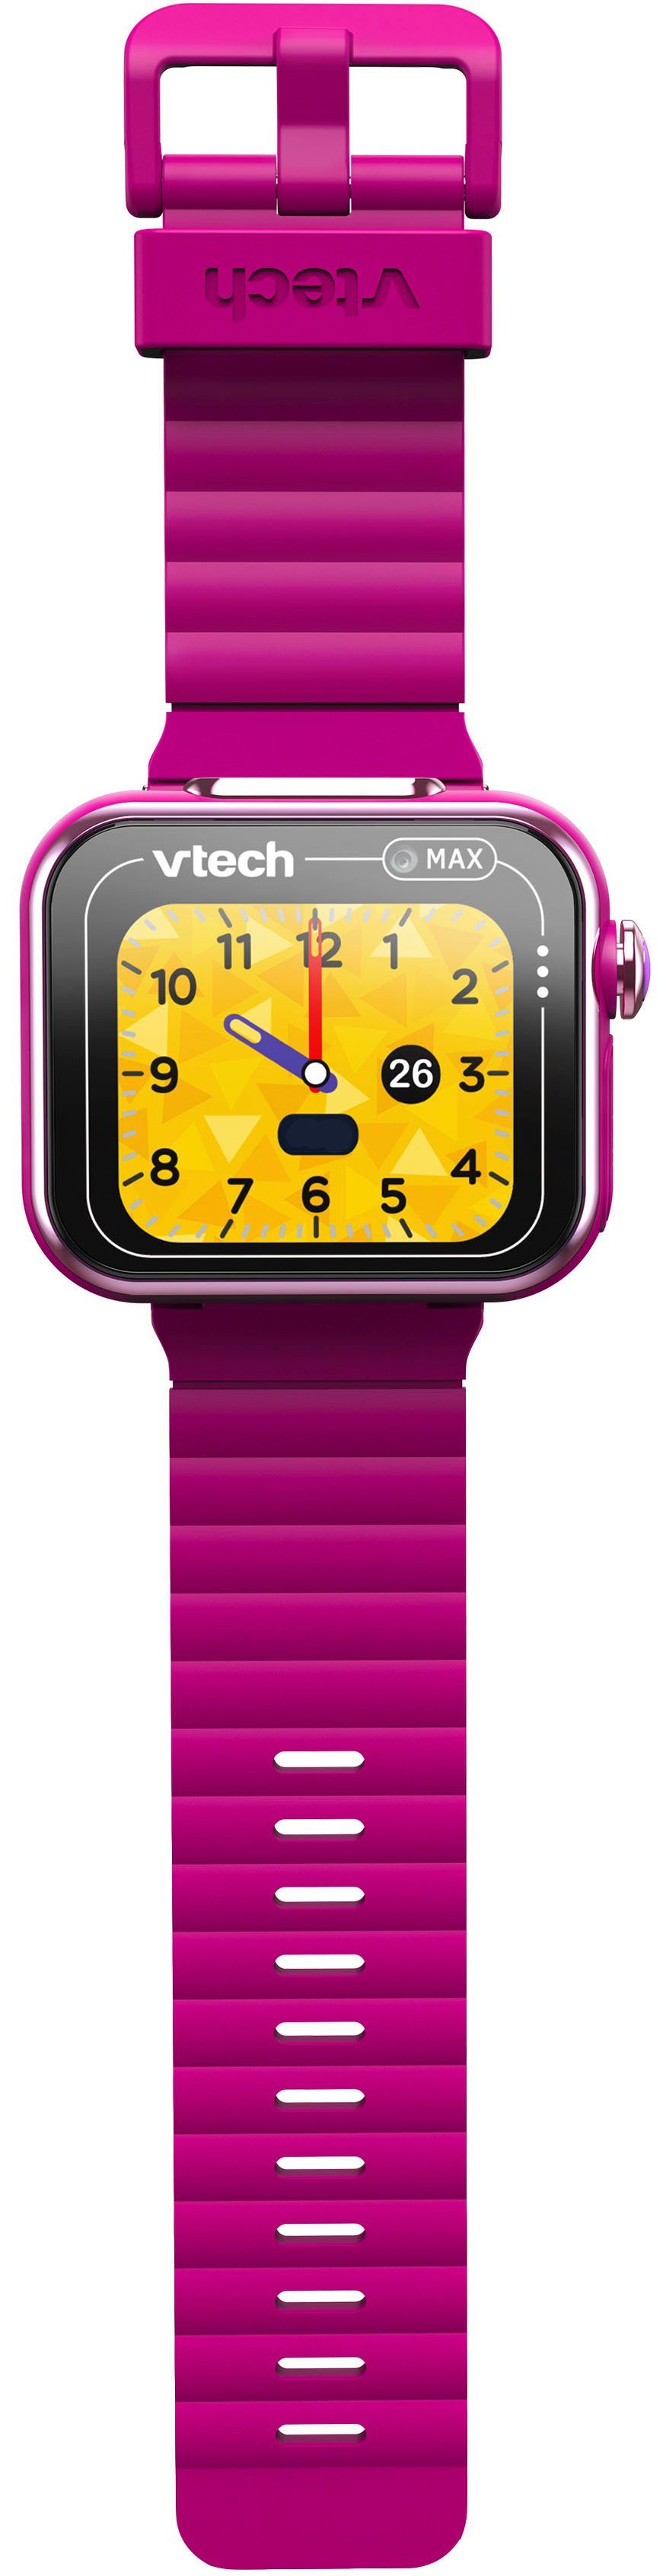 Vtech® Smart Watch MAX lila Lernspielzeug KidiZoom